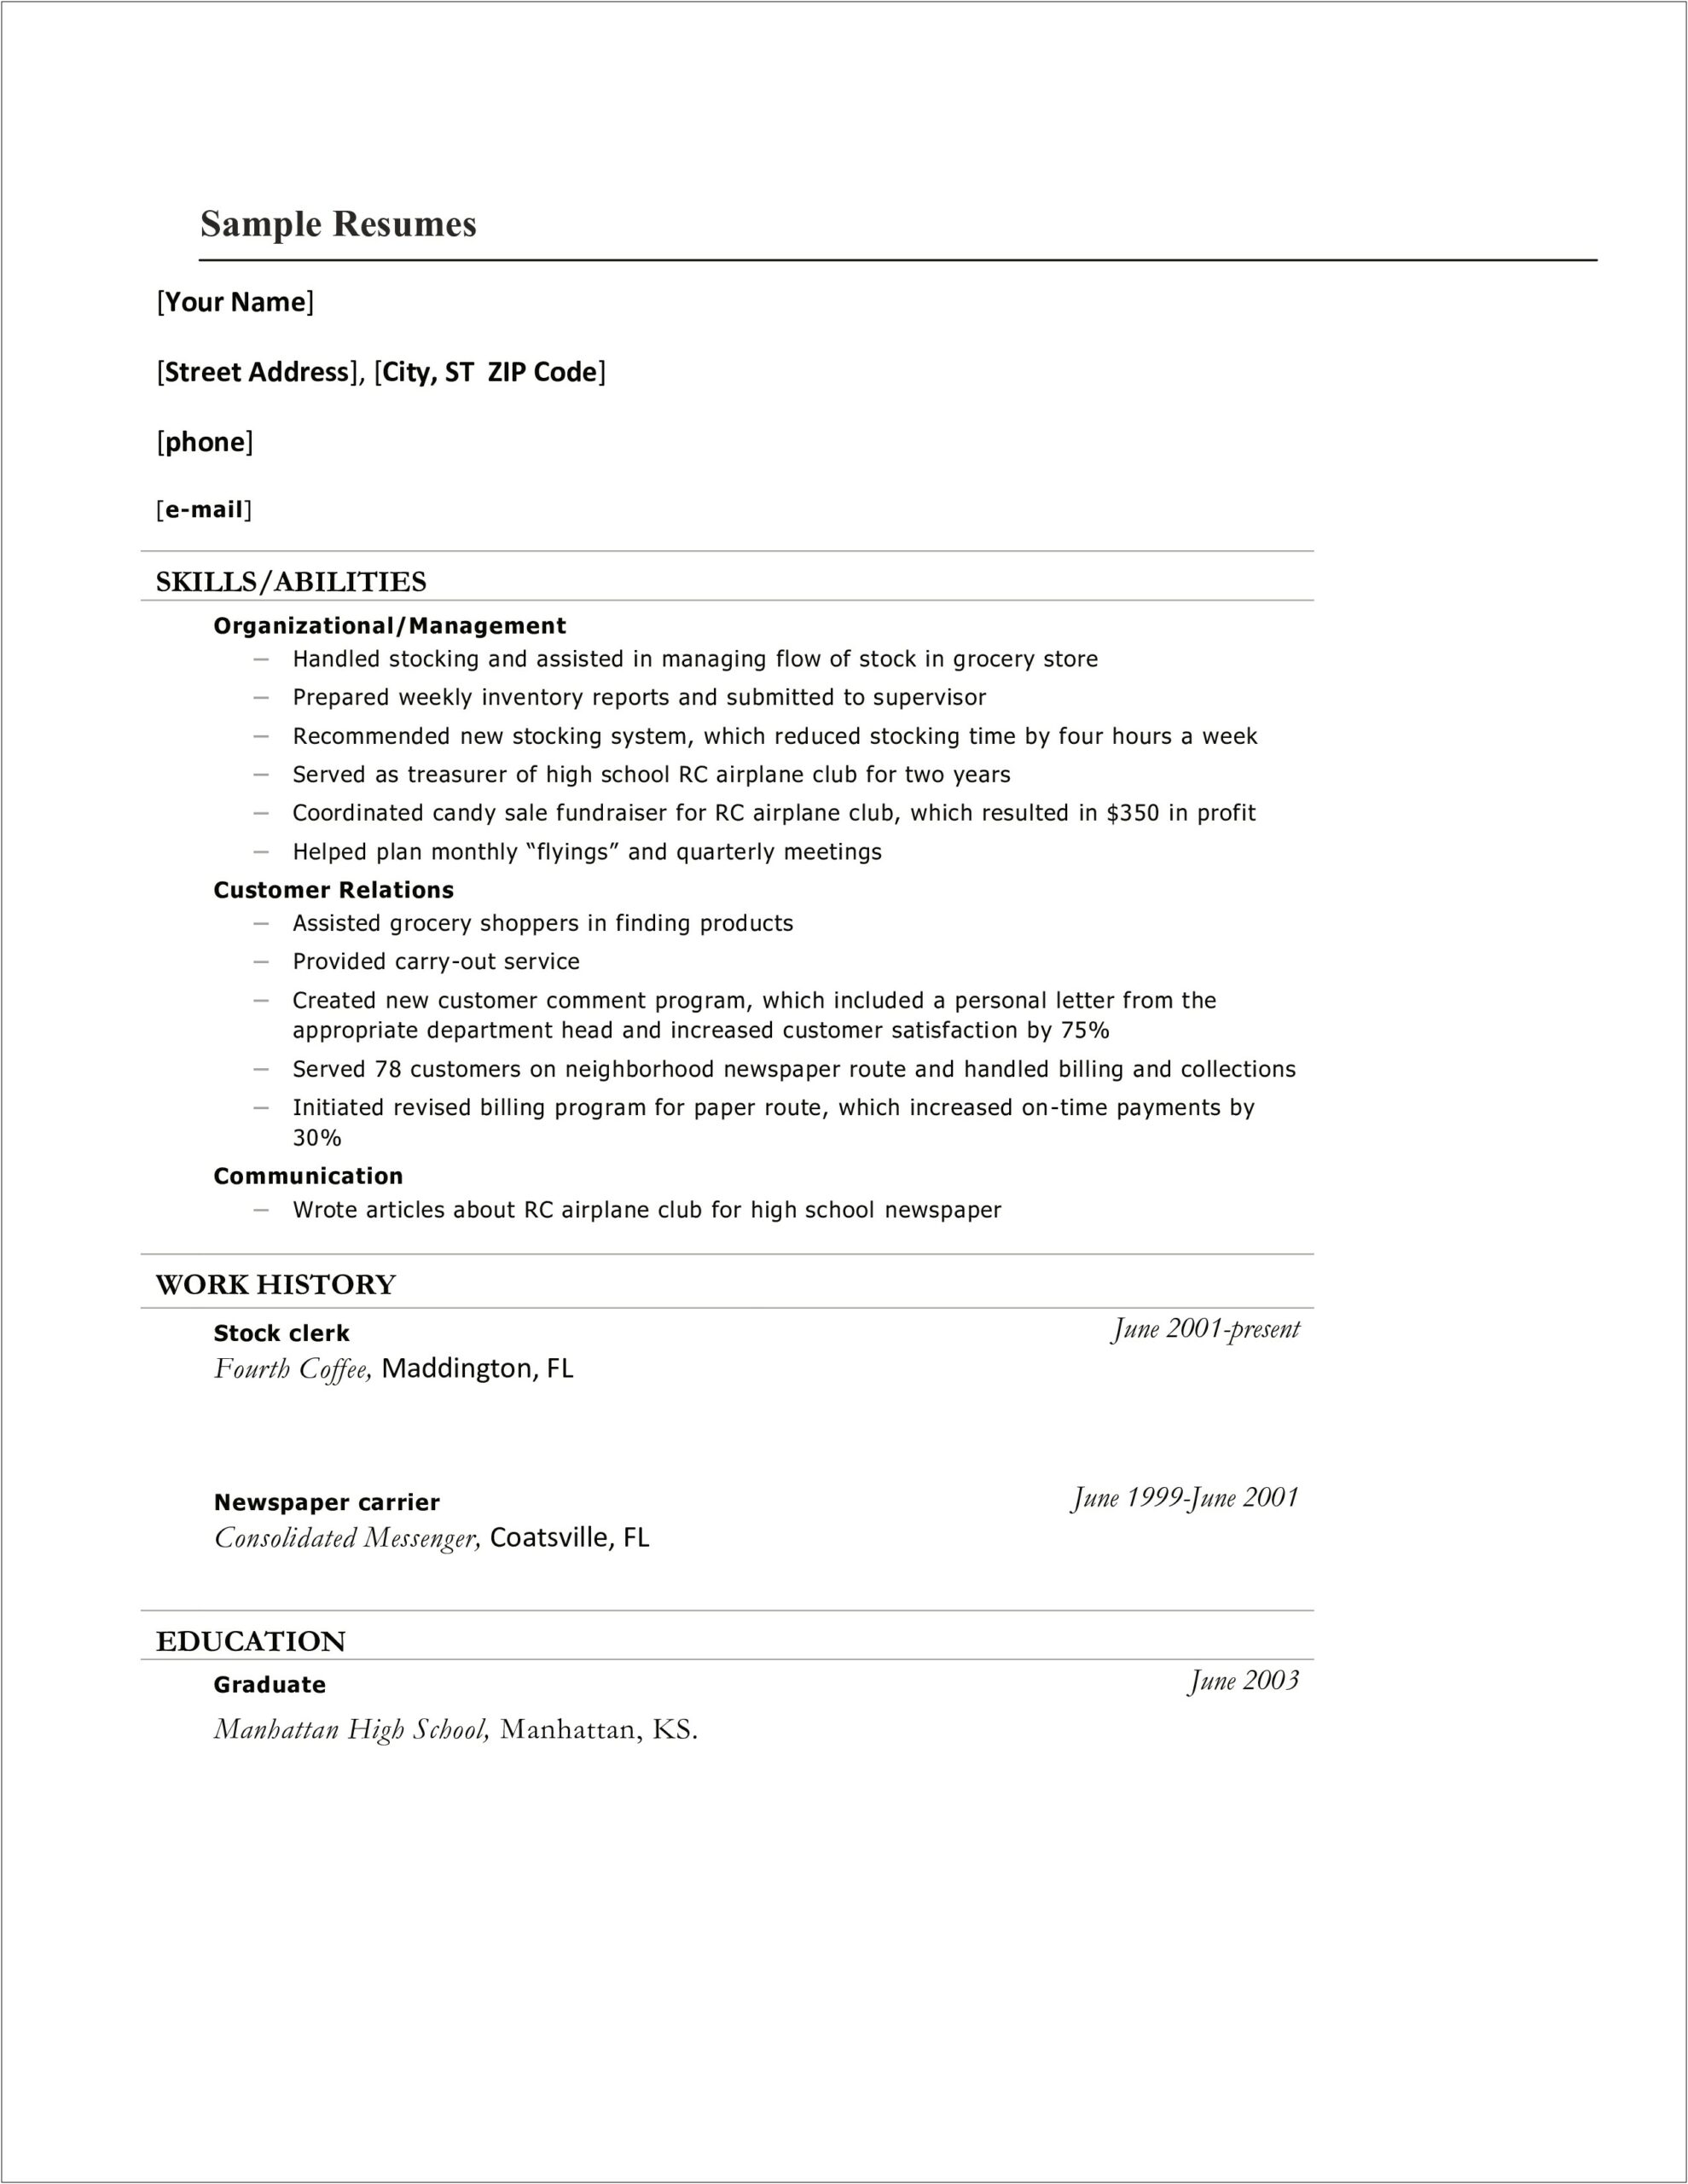 Sample Resume For Construction Carpenter